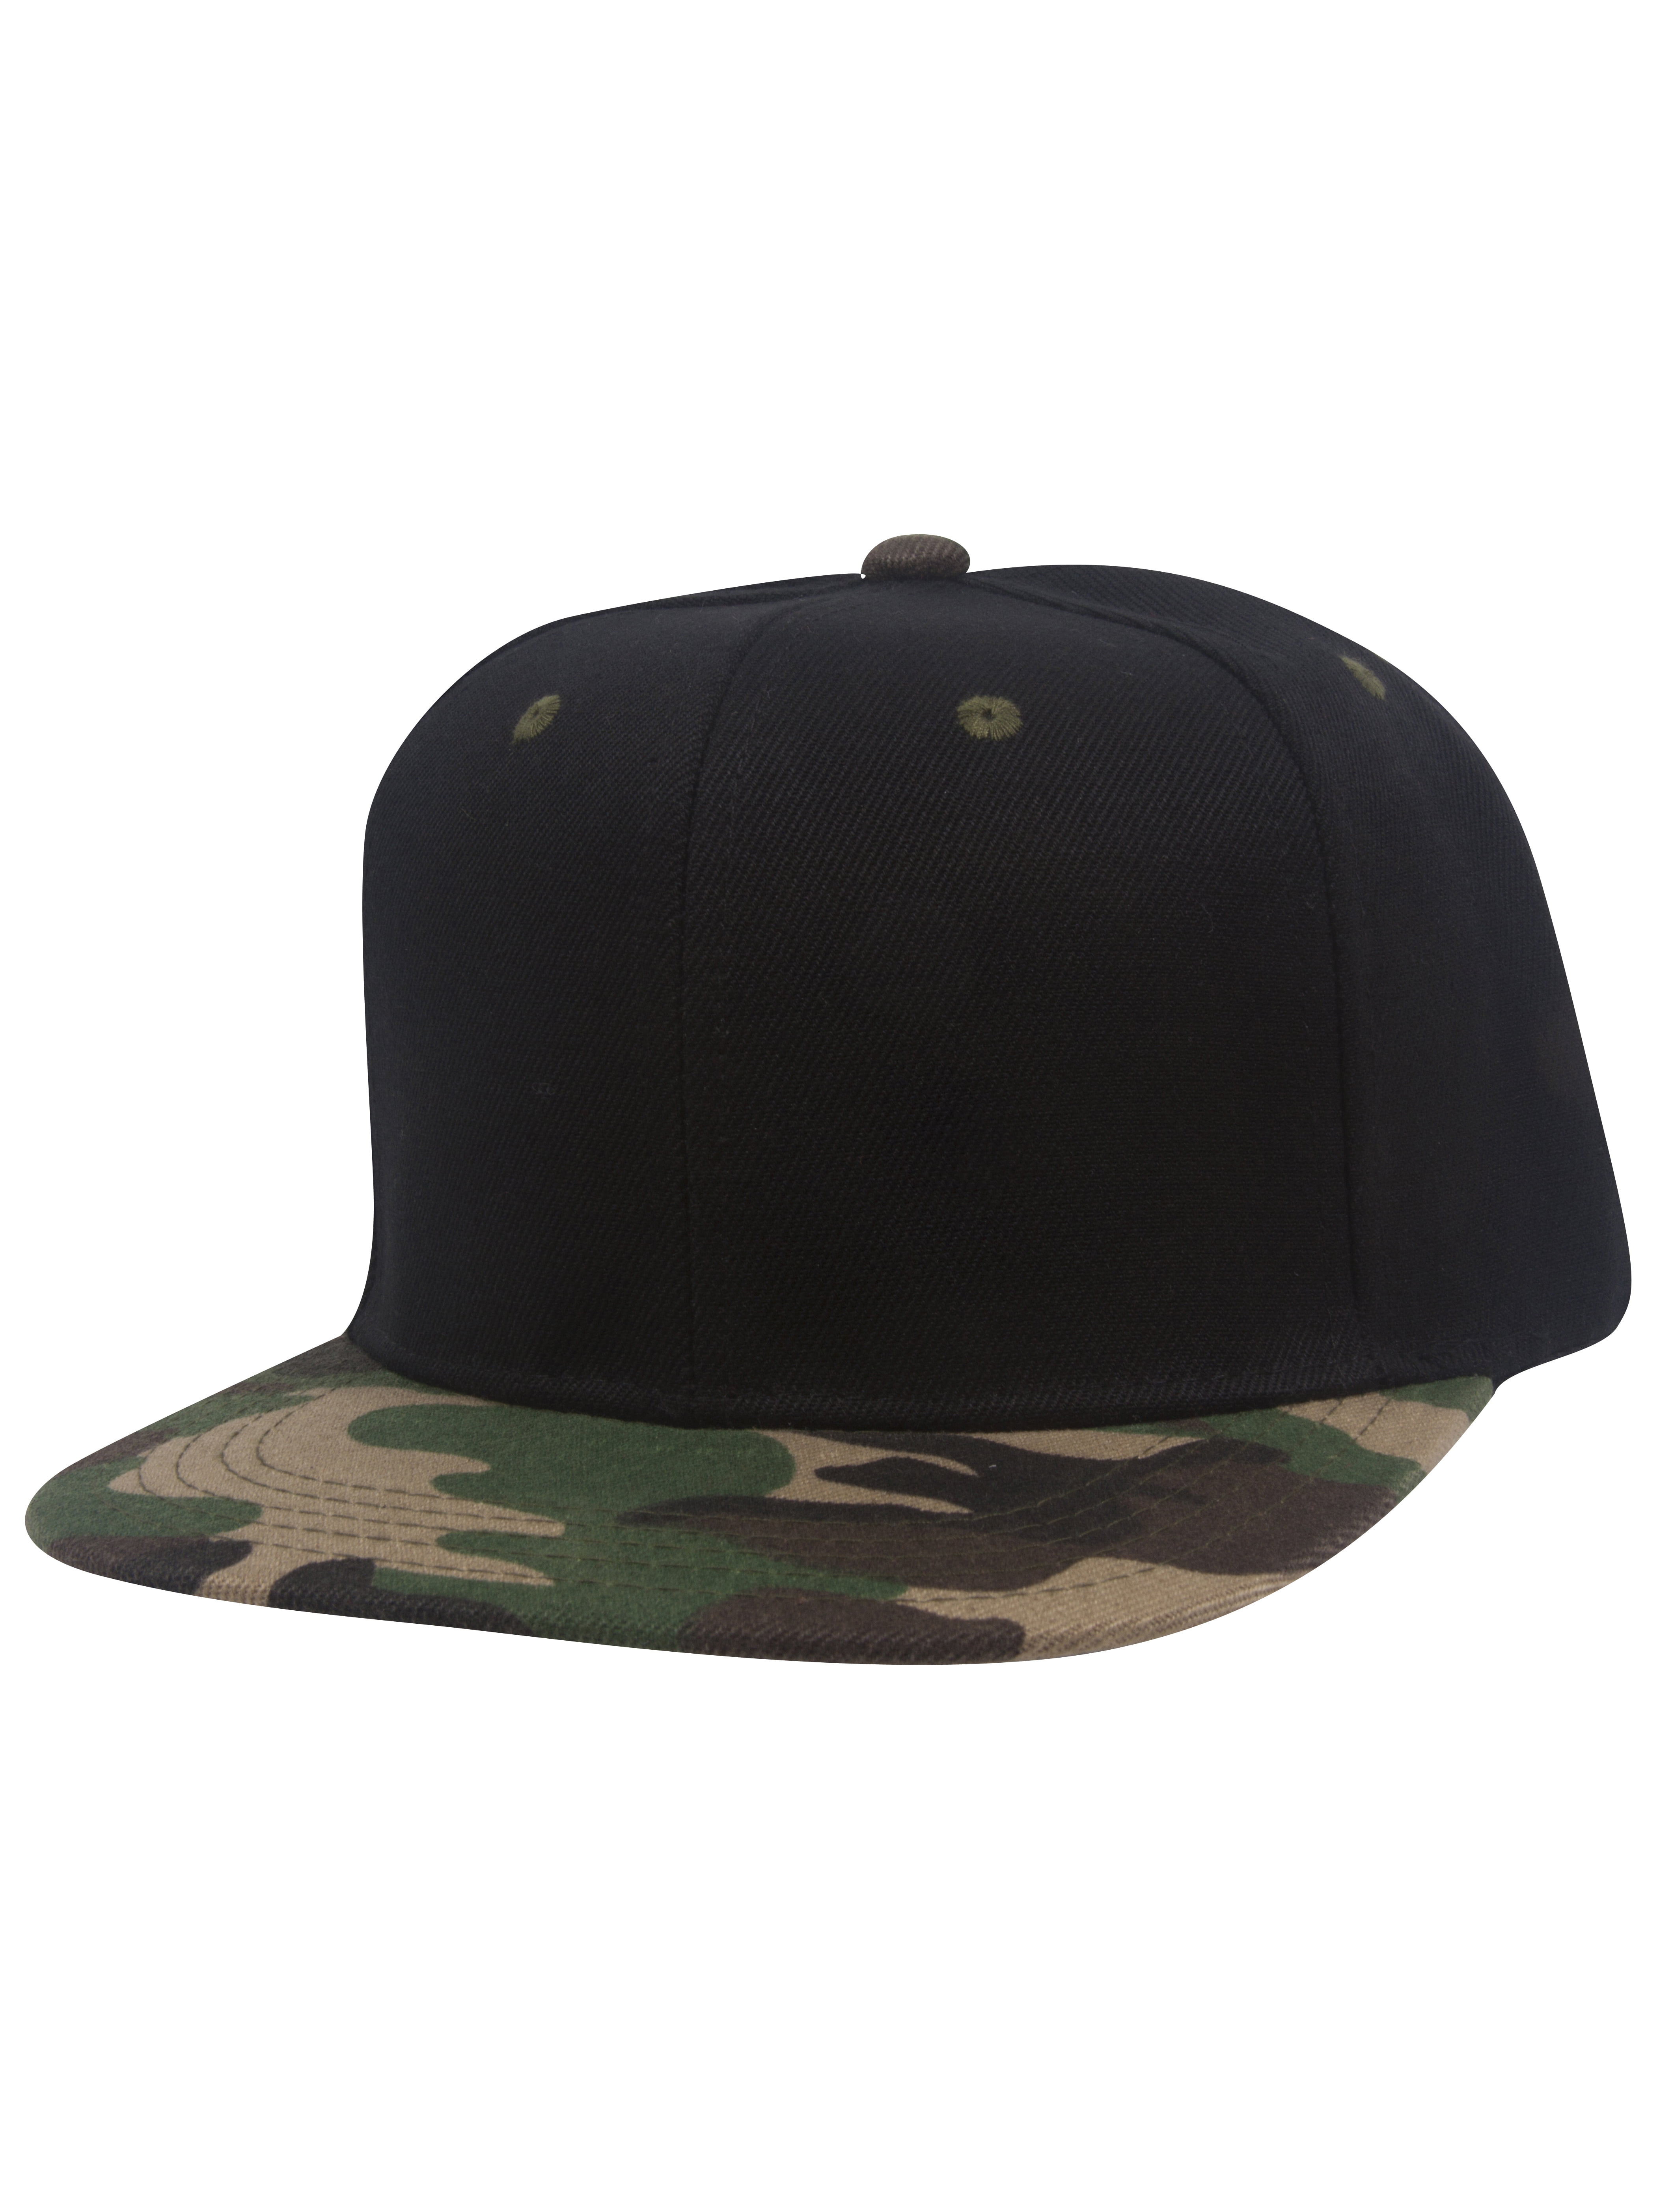 Top Headwear Flat Bill Adjustable Snapback Cap - Green/Black